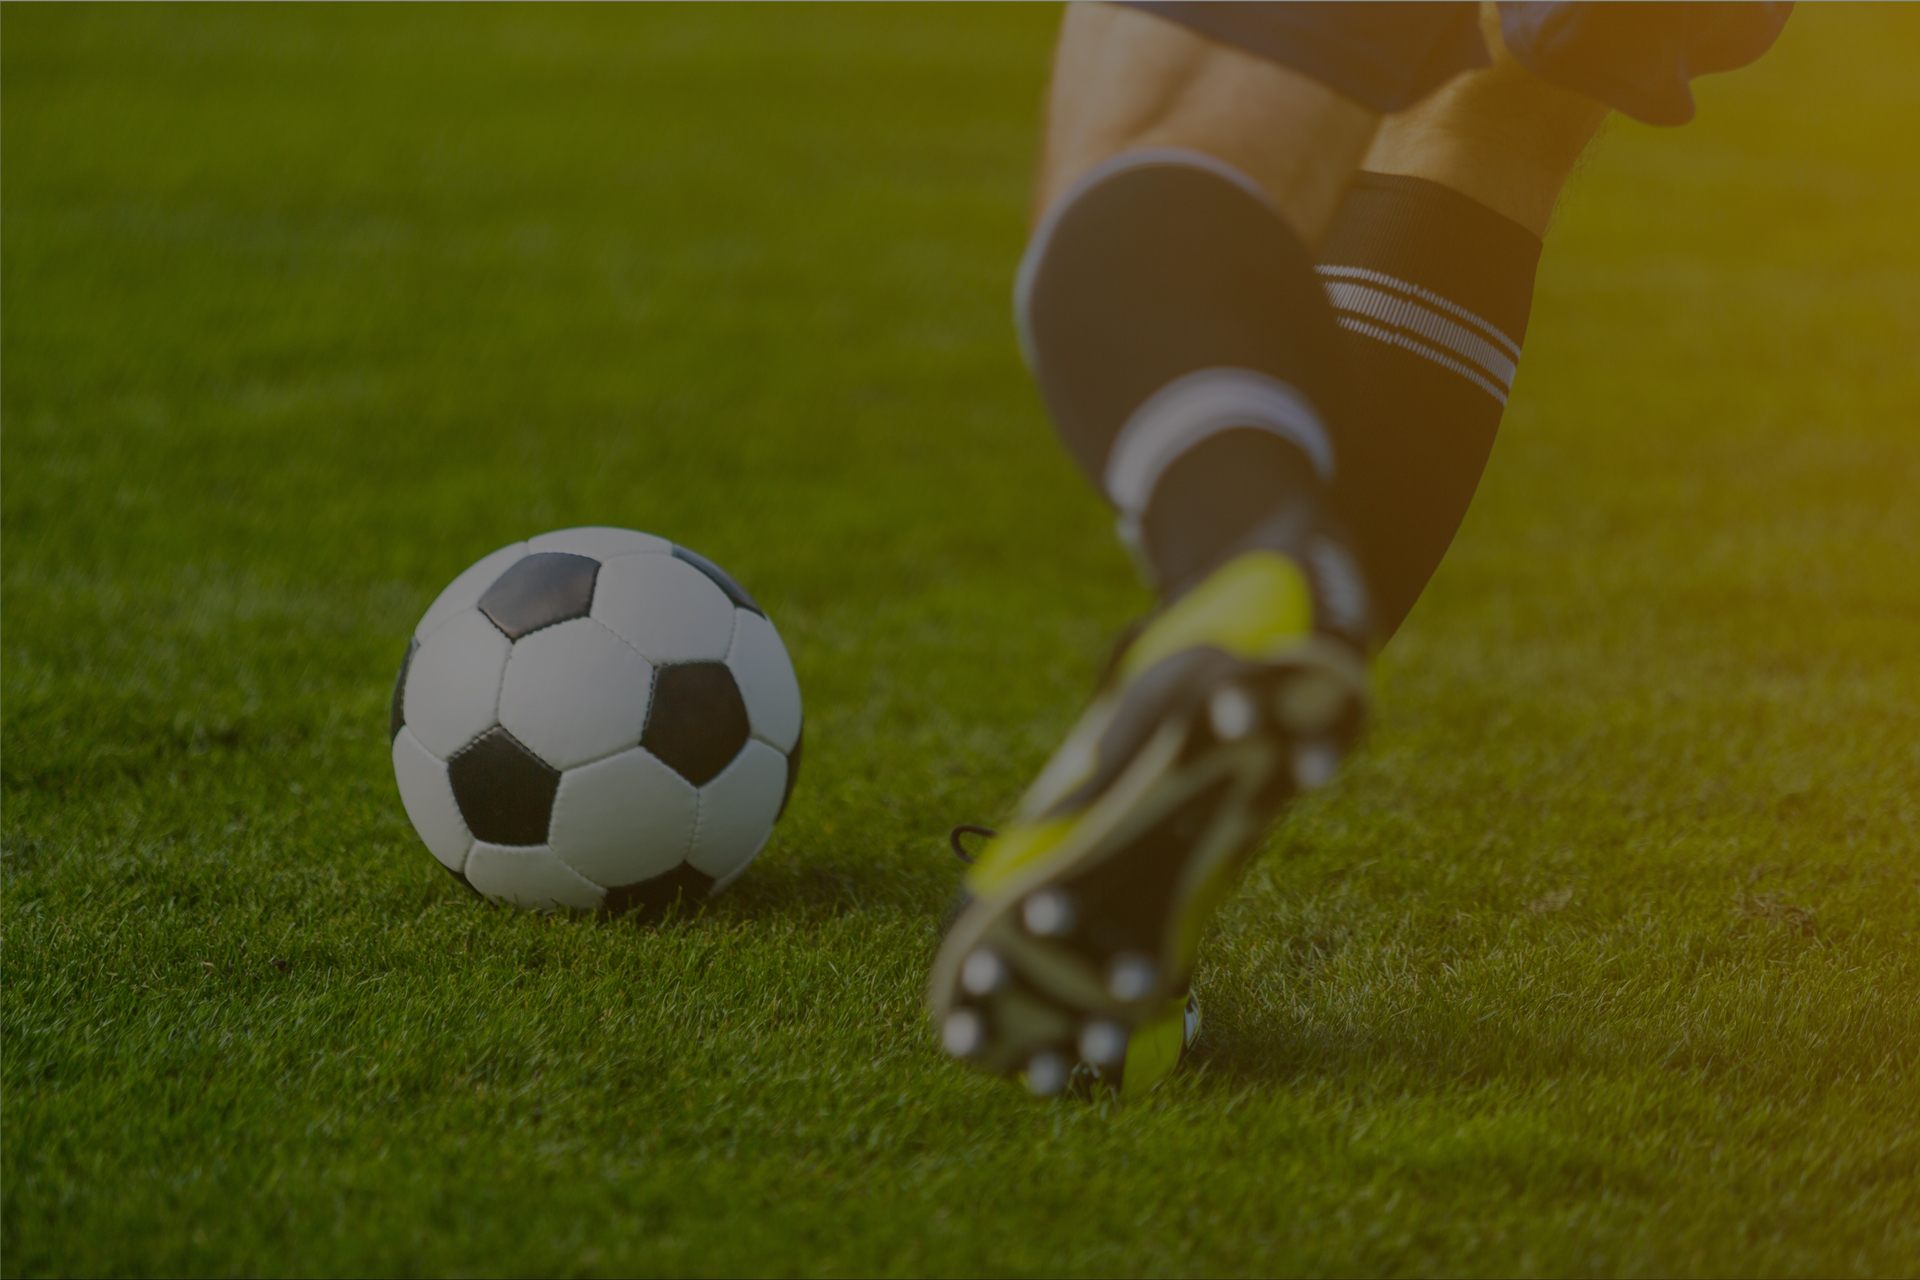 Kicking a Soccer Ball Forward: Body Movement in the Lower Leg